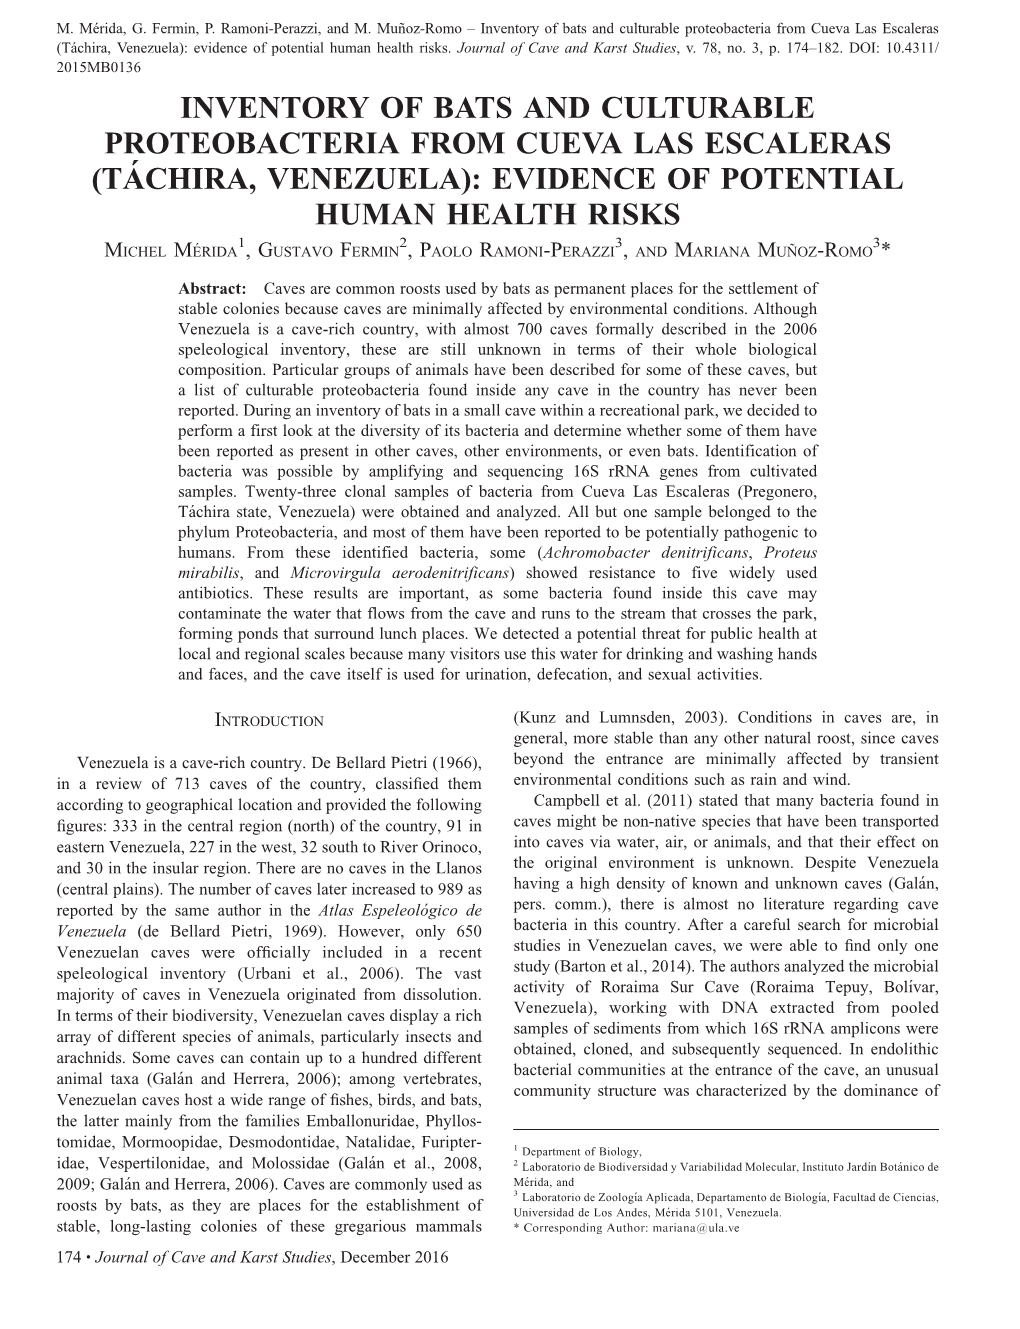 Inventory of Bats and Culturable Proteobacteria from Cueva Las Escaleras (Ta´Chira, Venezuela): Evidence of Potential Human Health Risks